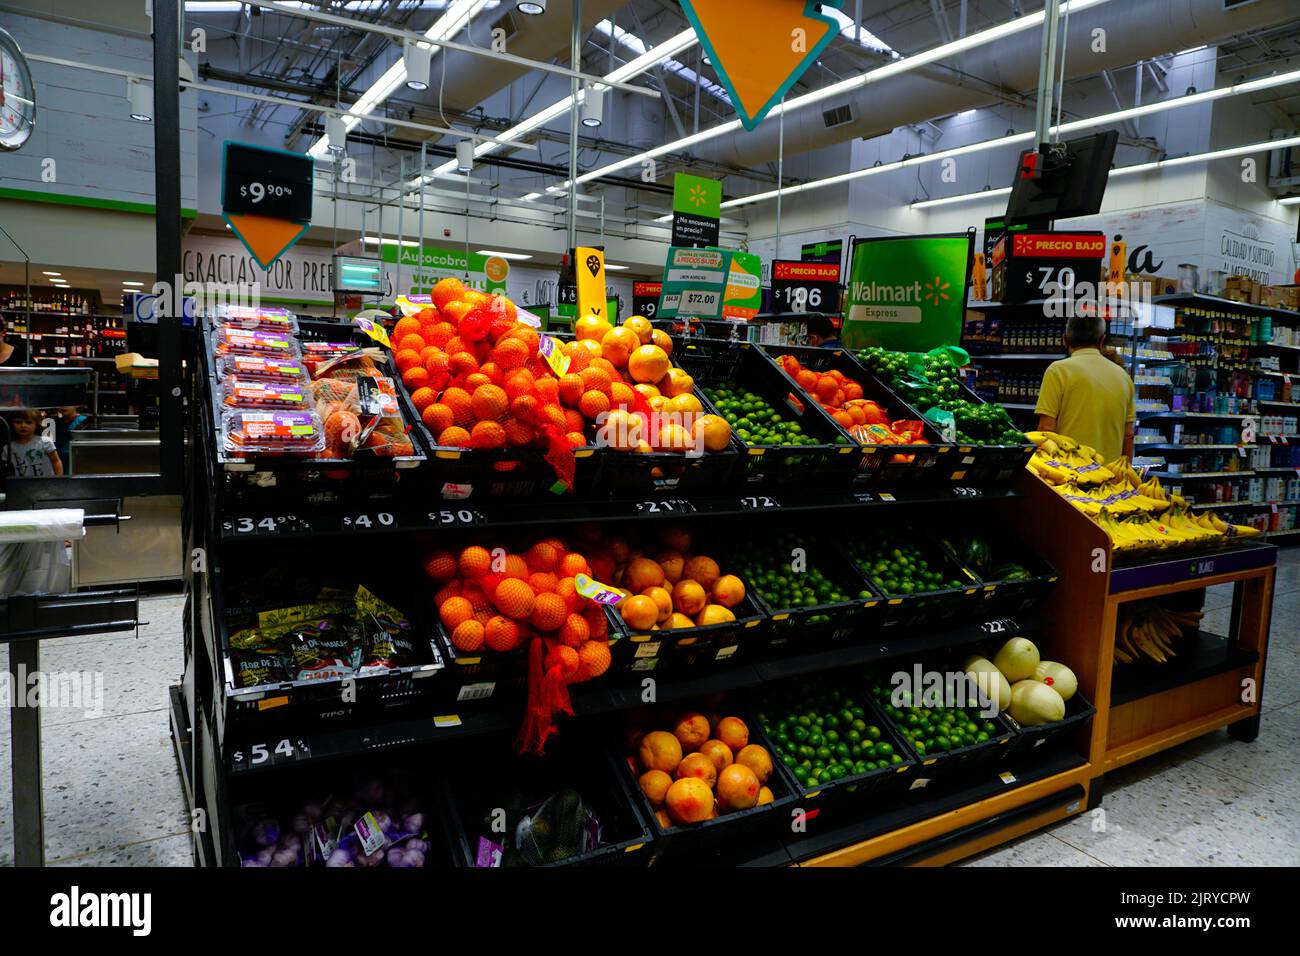 Walmart Express grocery store, Mexico City, Mexico Stock Photo